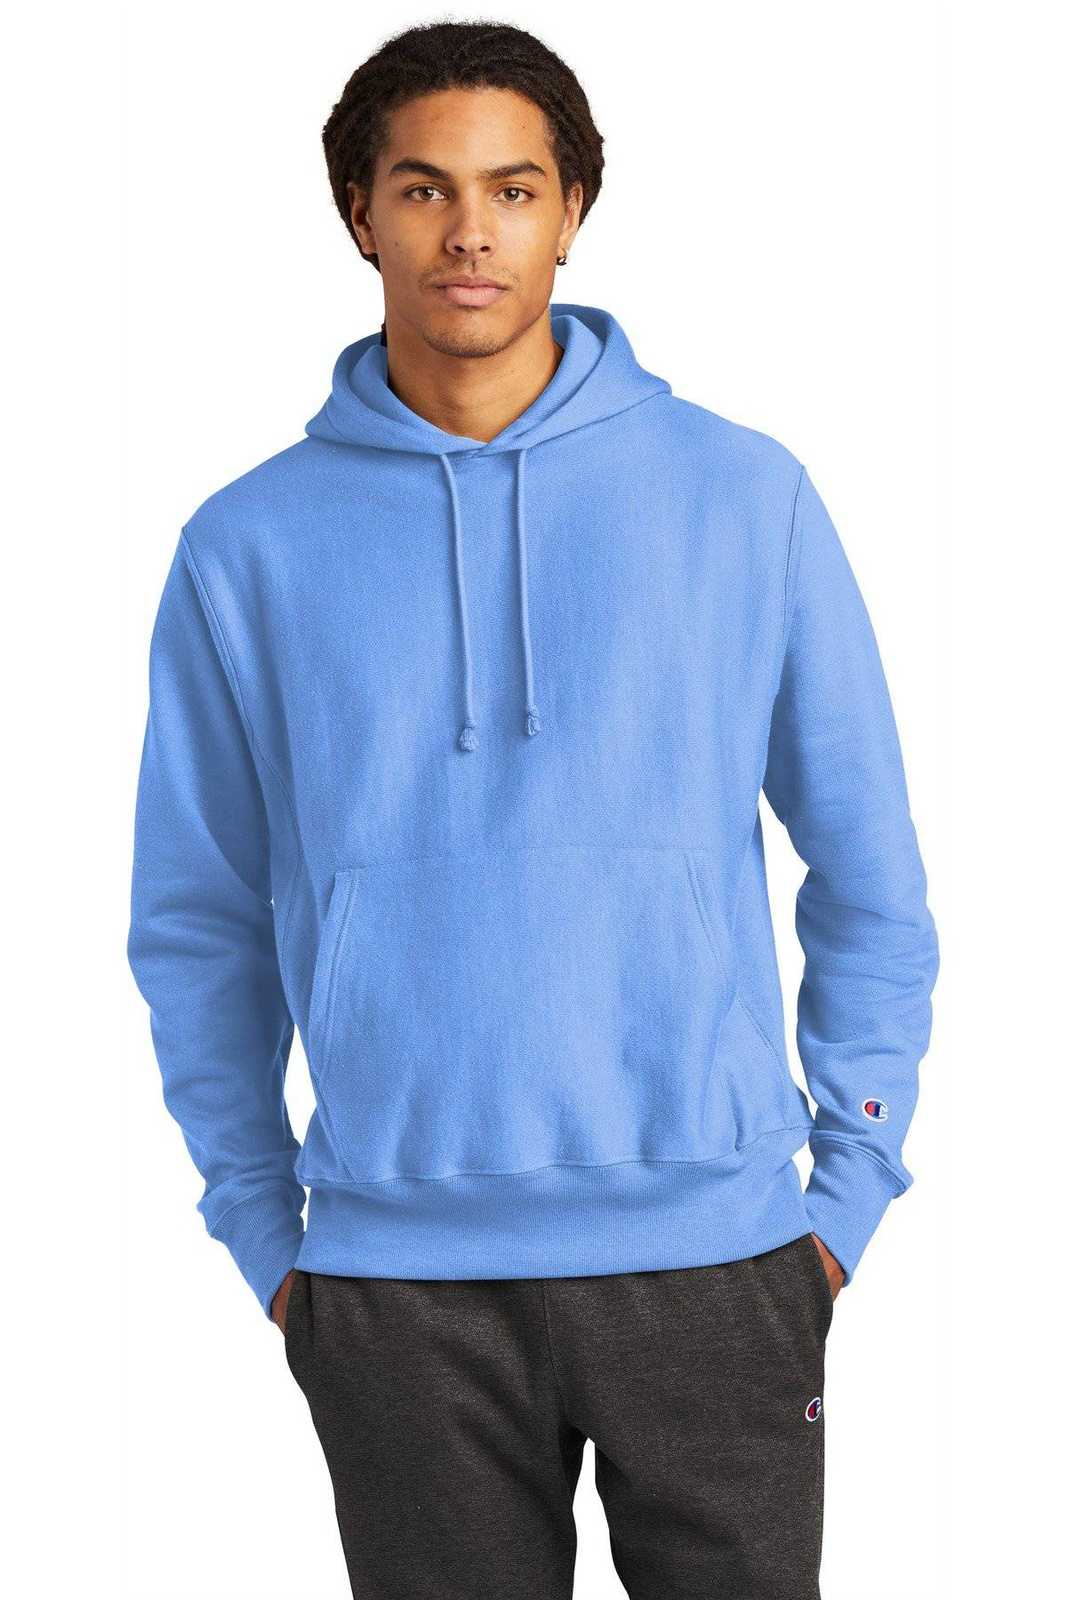 modstand ru forening Champion S101 Reverse Weave Hooded Sweatshirt - Light Blue